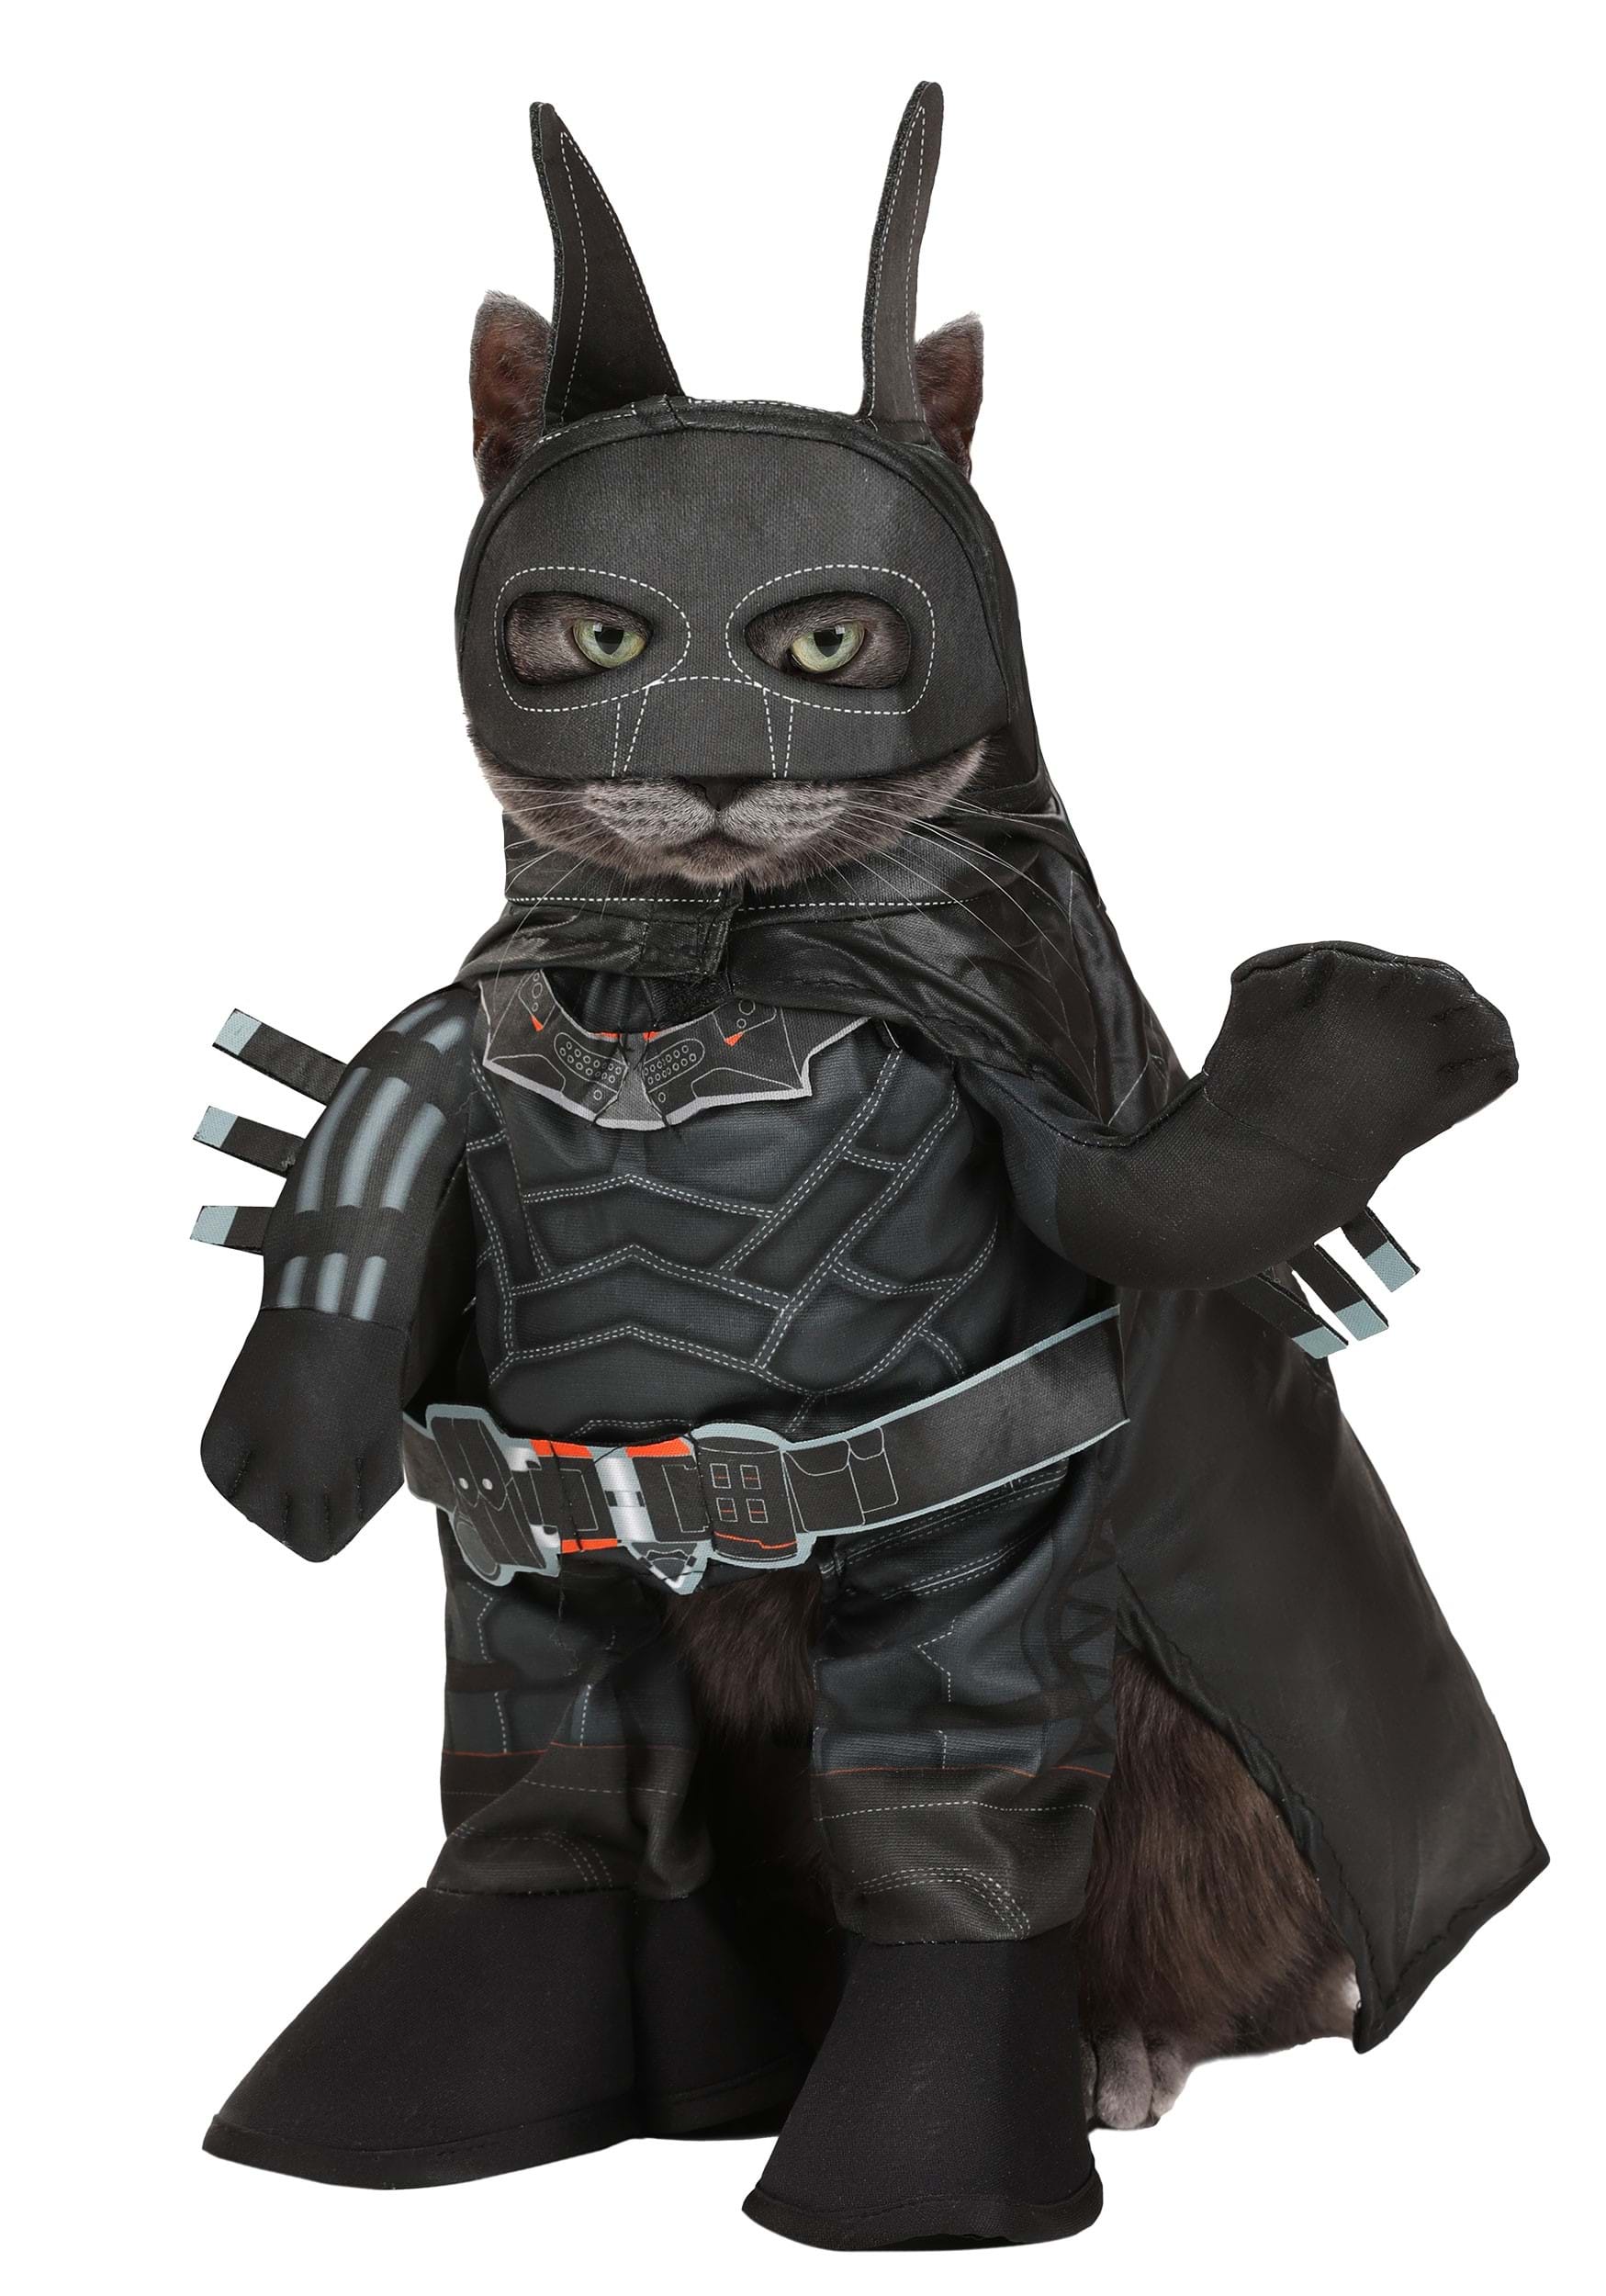 The Batman Pet Costume